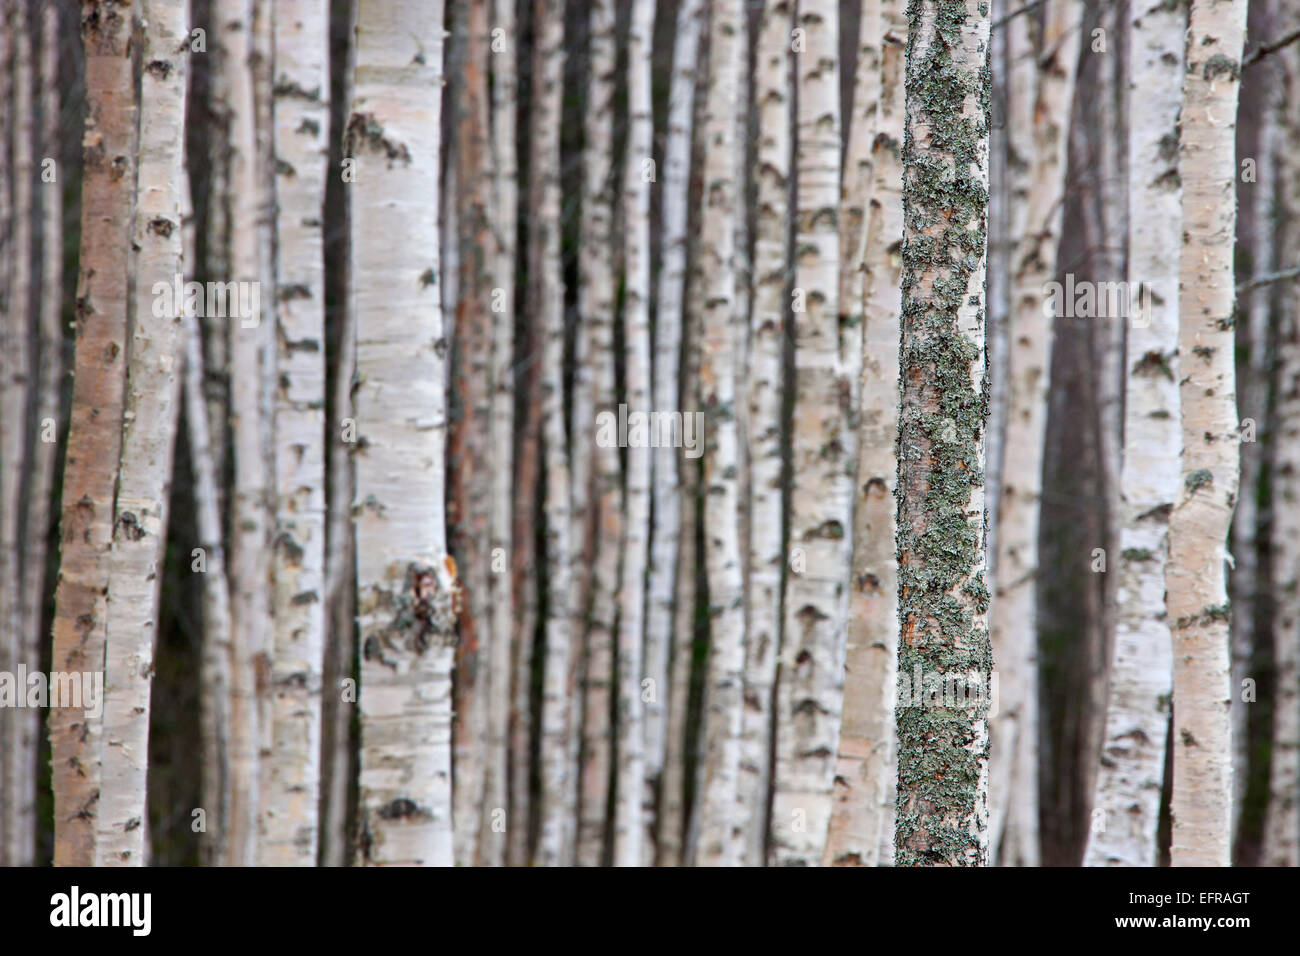 Argento / betulla presenta verrucosa betulla (Betula pendula / betula alba / Betula verrucosa) tronchi di betulle nel bosco di latifoglie Foto Stock